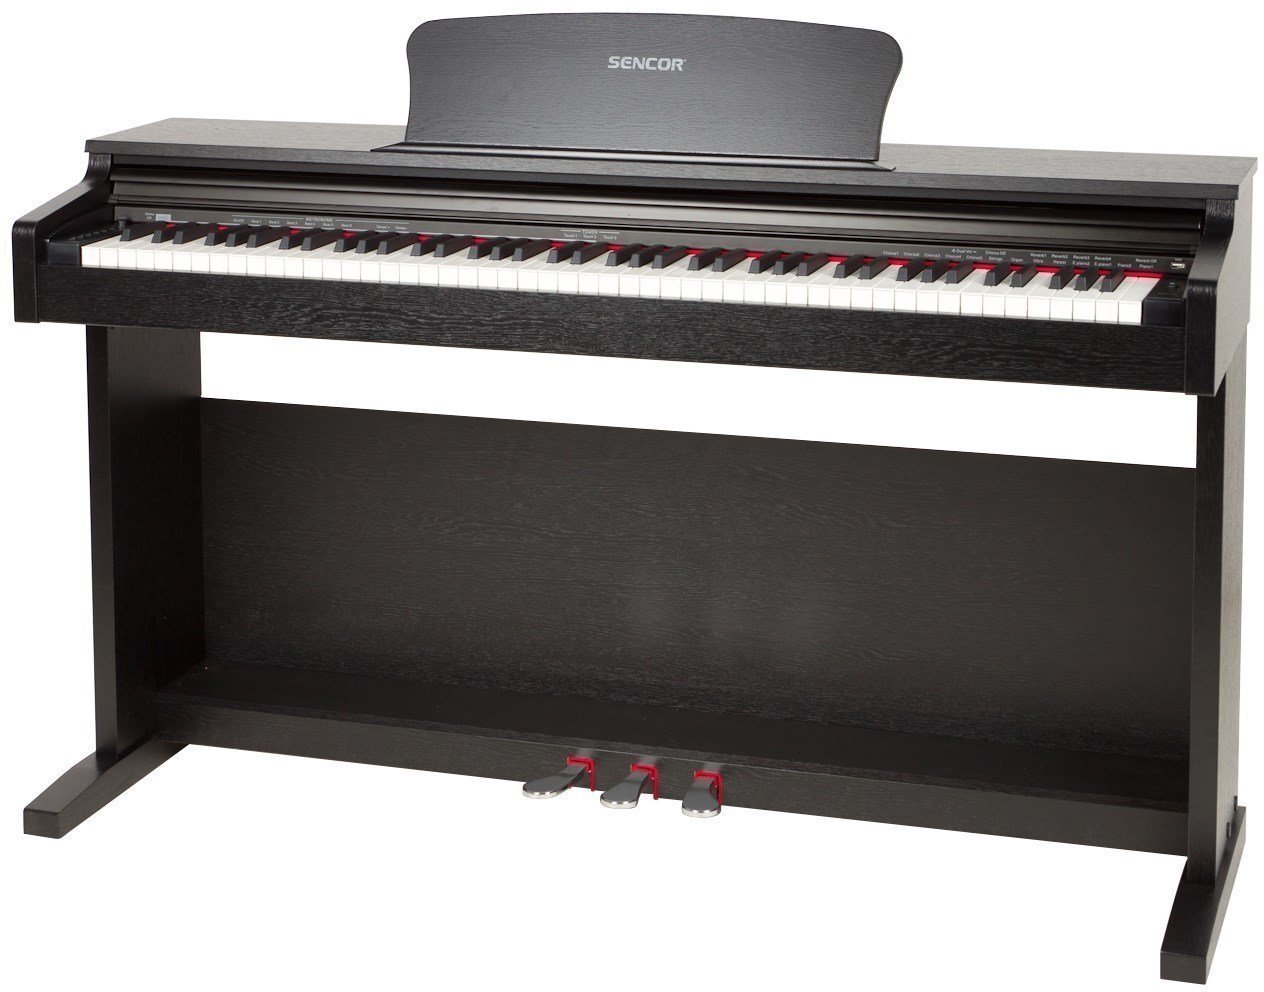 Piano digital SENCOR SDP 100 Negro Piano digital